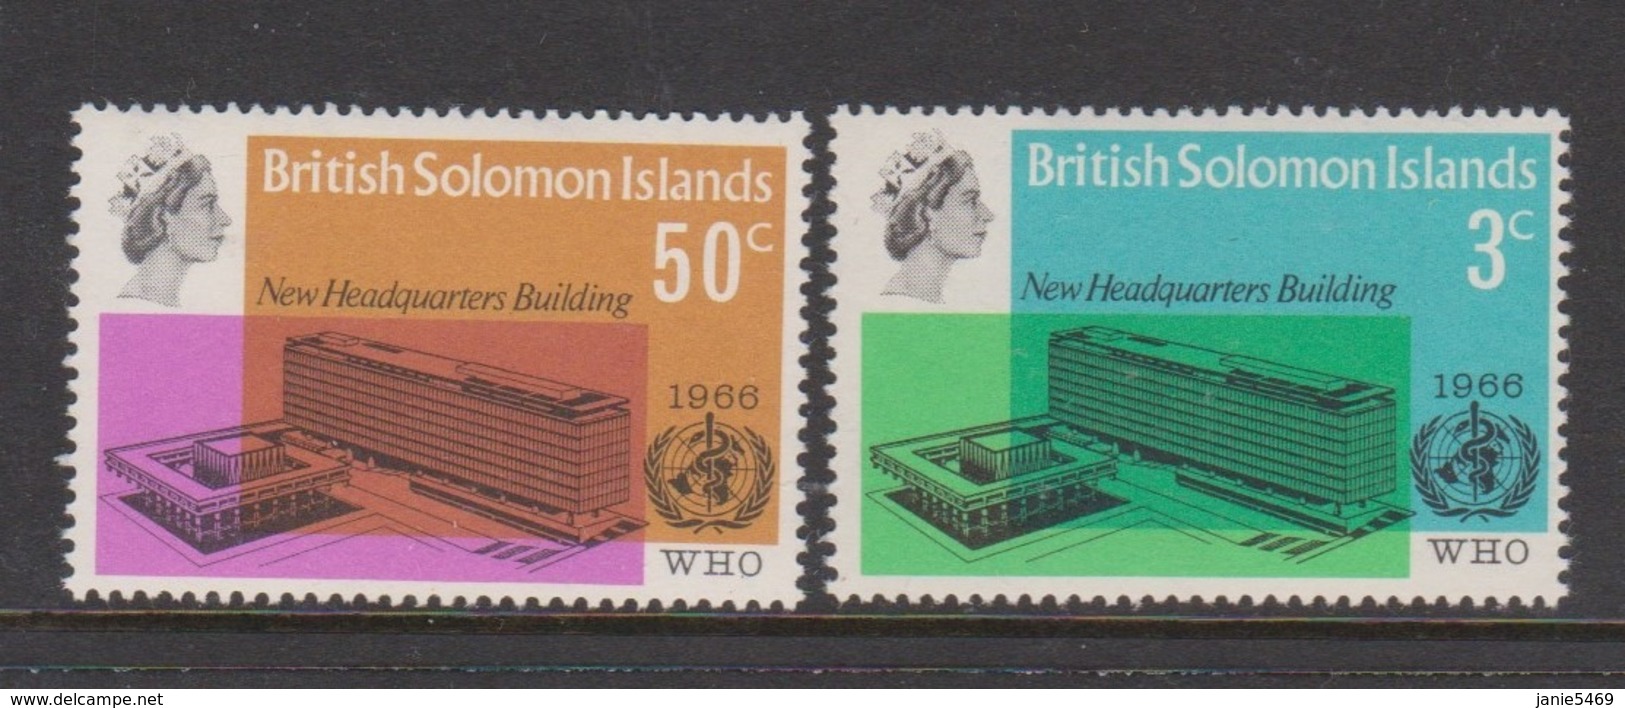 Solomon Islands SG 155-156  1966 Inauguration Of WHO Headquarters,mint Never  Hinged - Solomon Islands (1978-...)